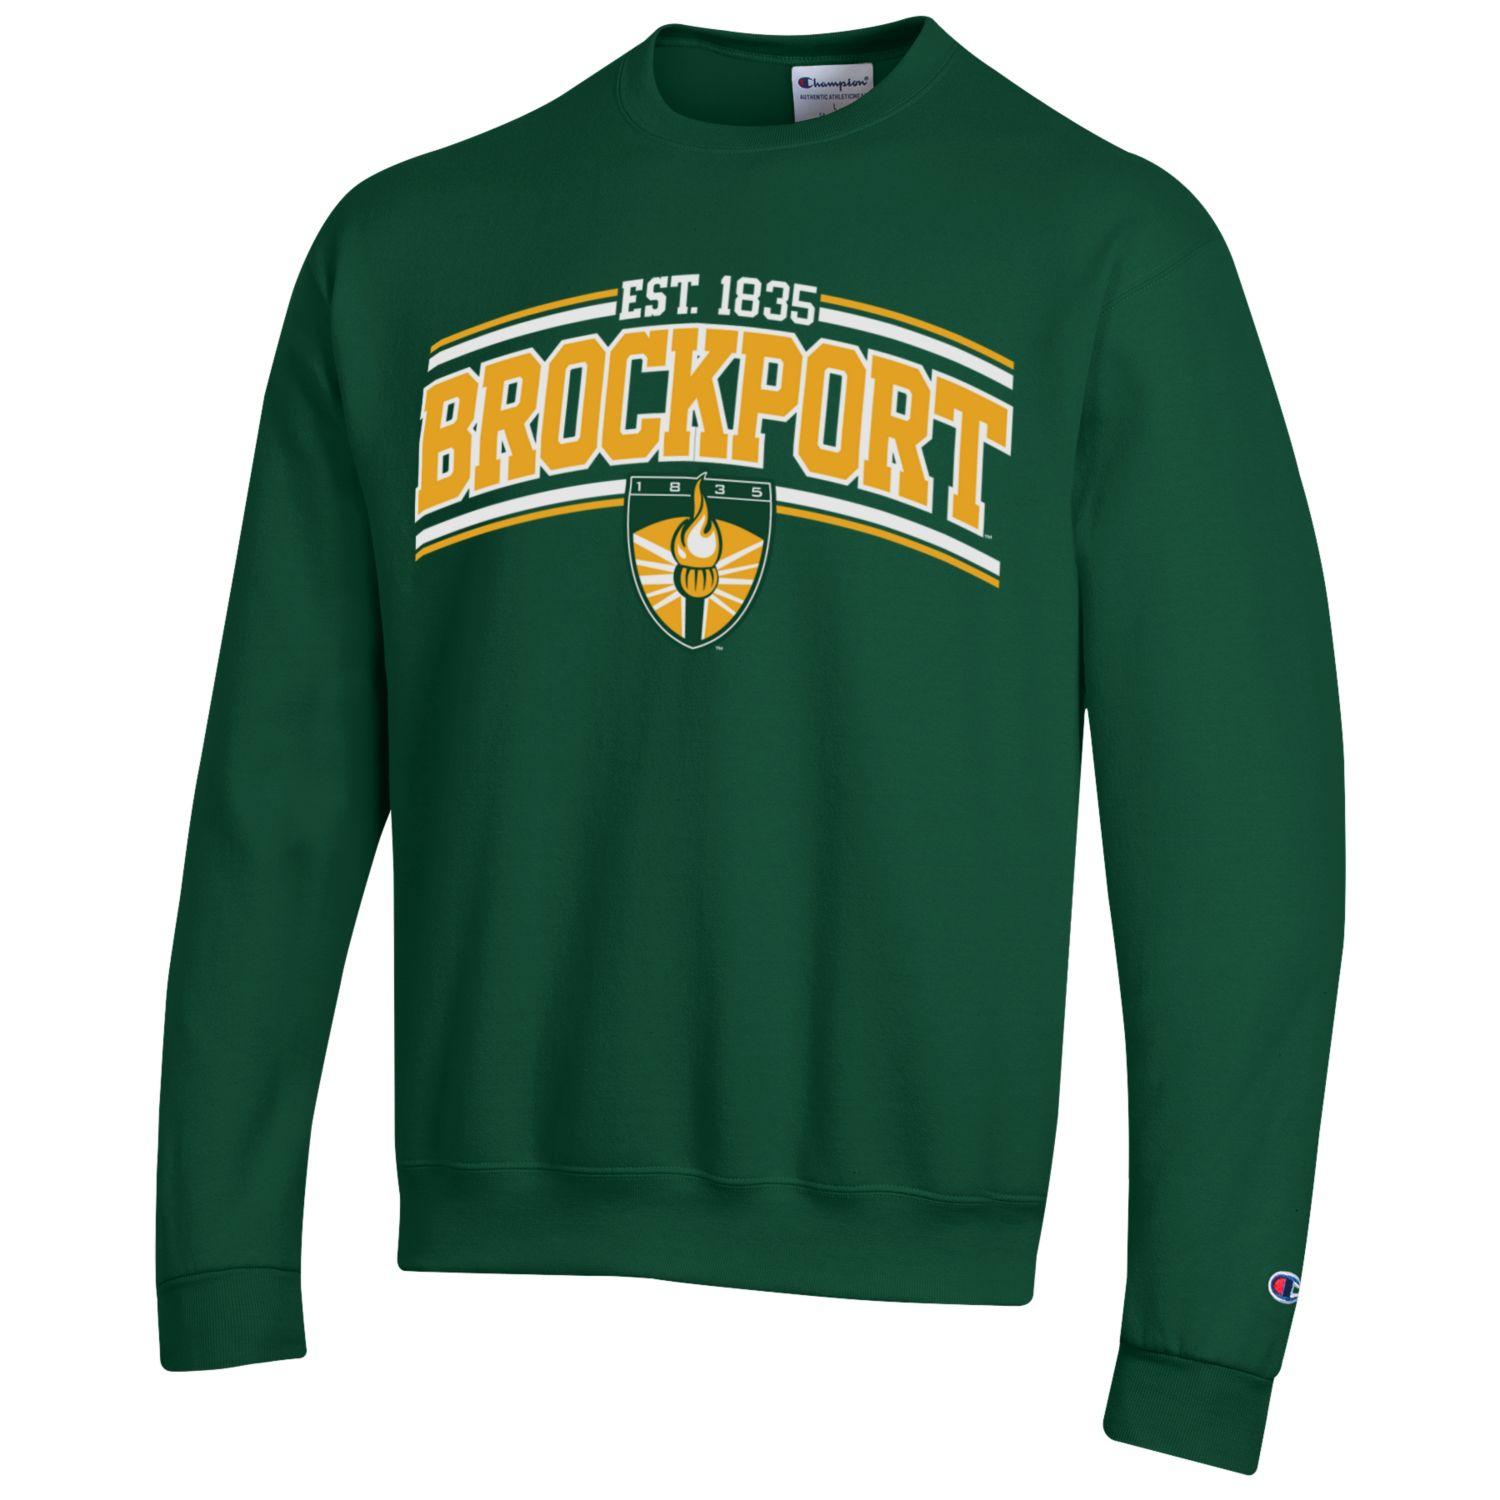 Brockport State University of New York Green Sweatshirt